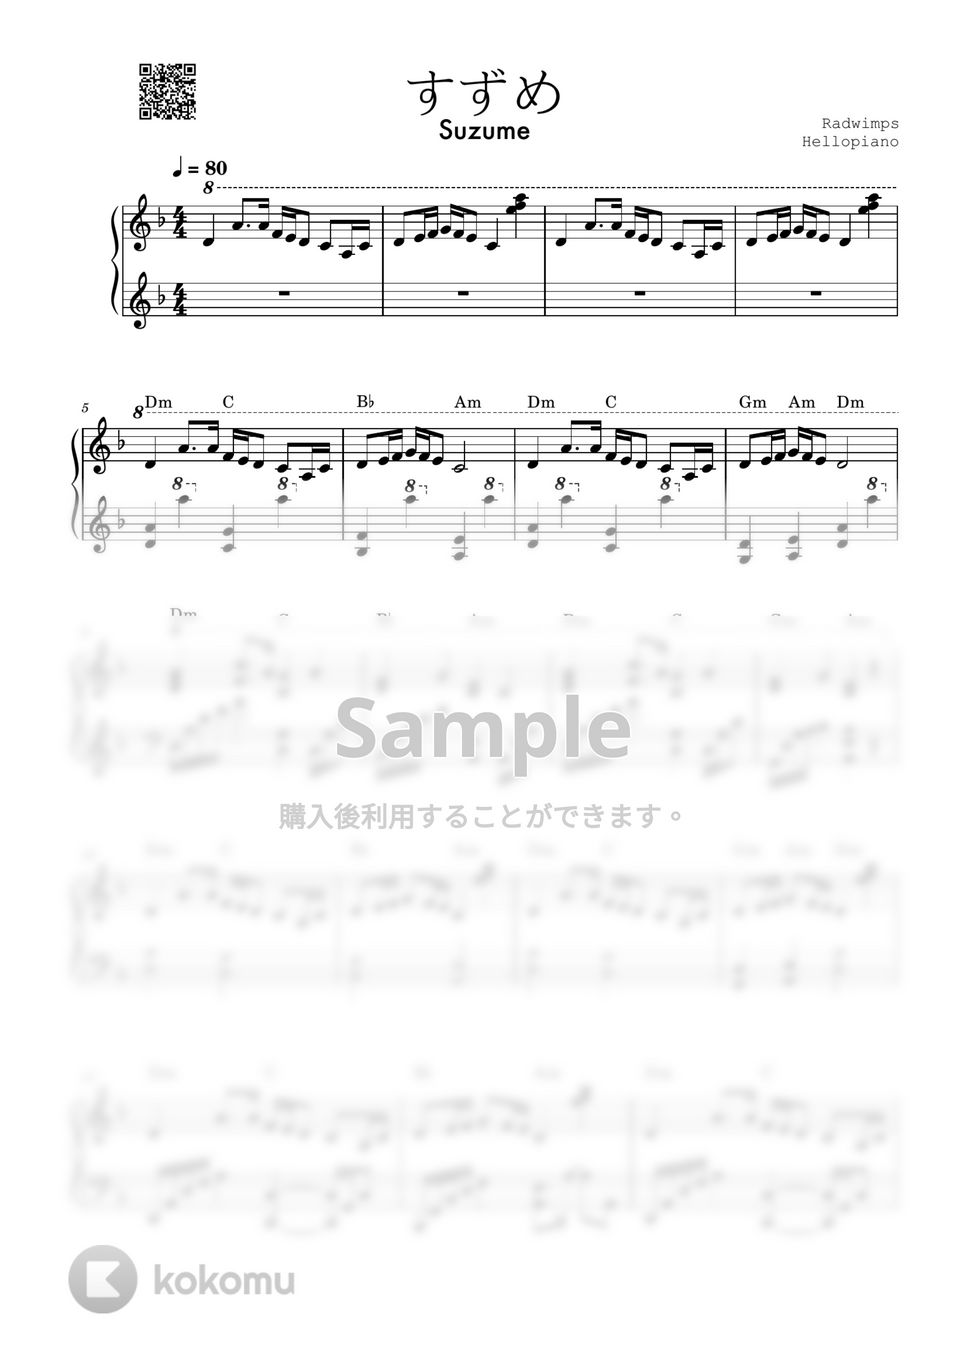 Radwimps - すずめ(suzume) by Hellopiano